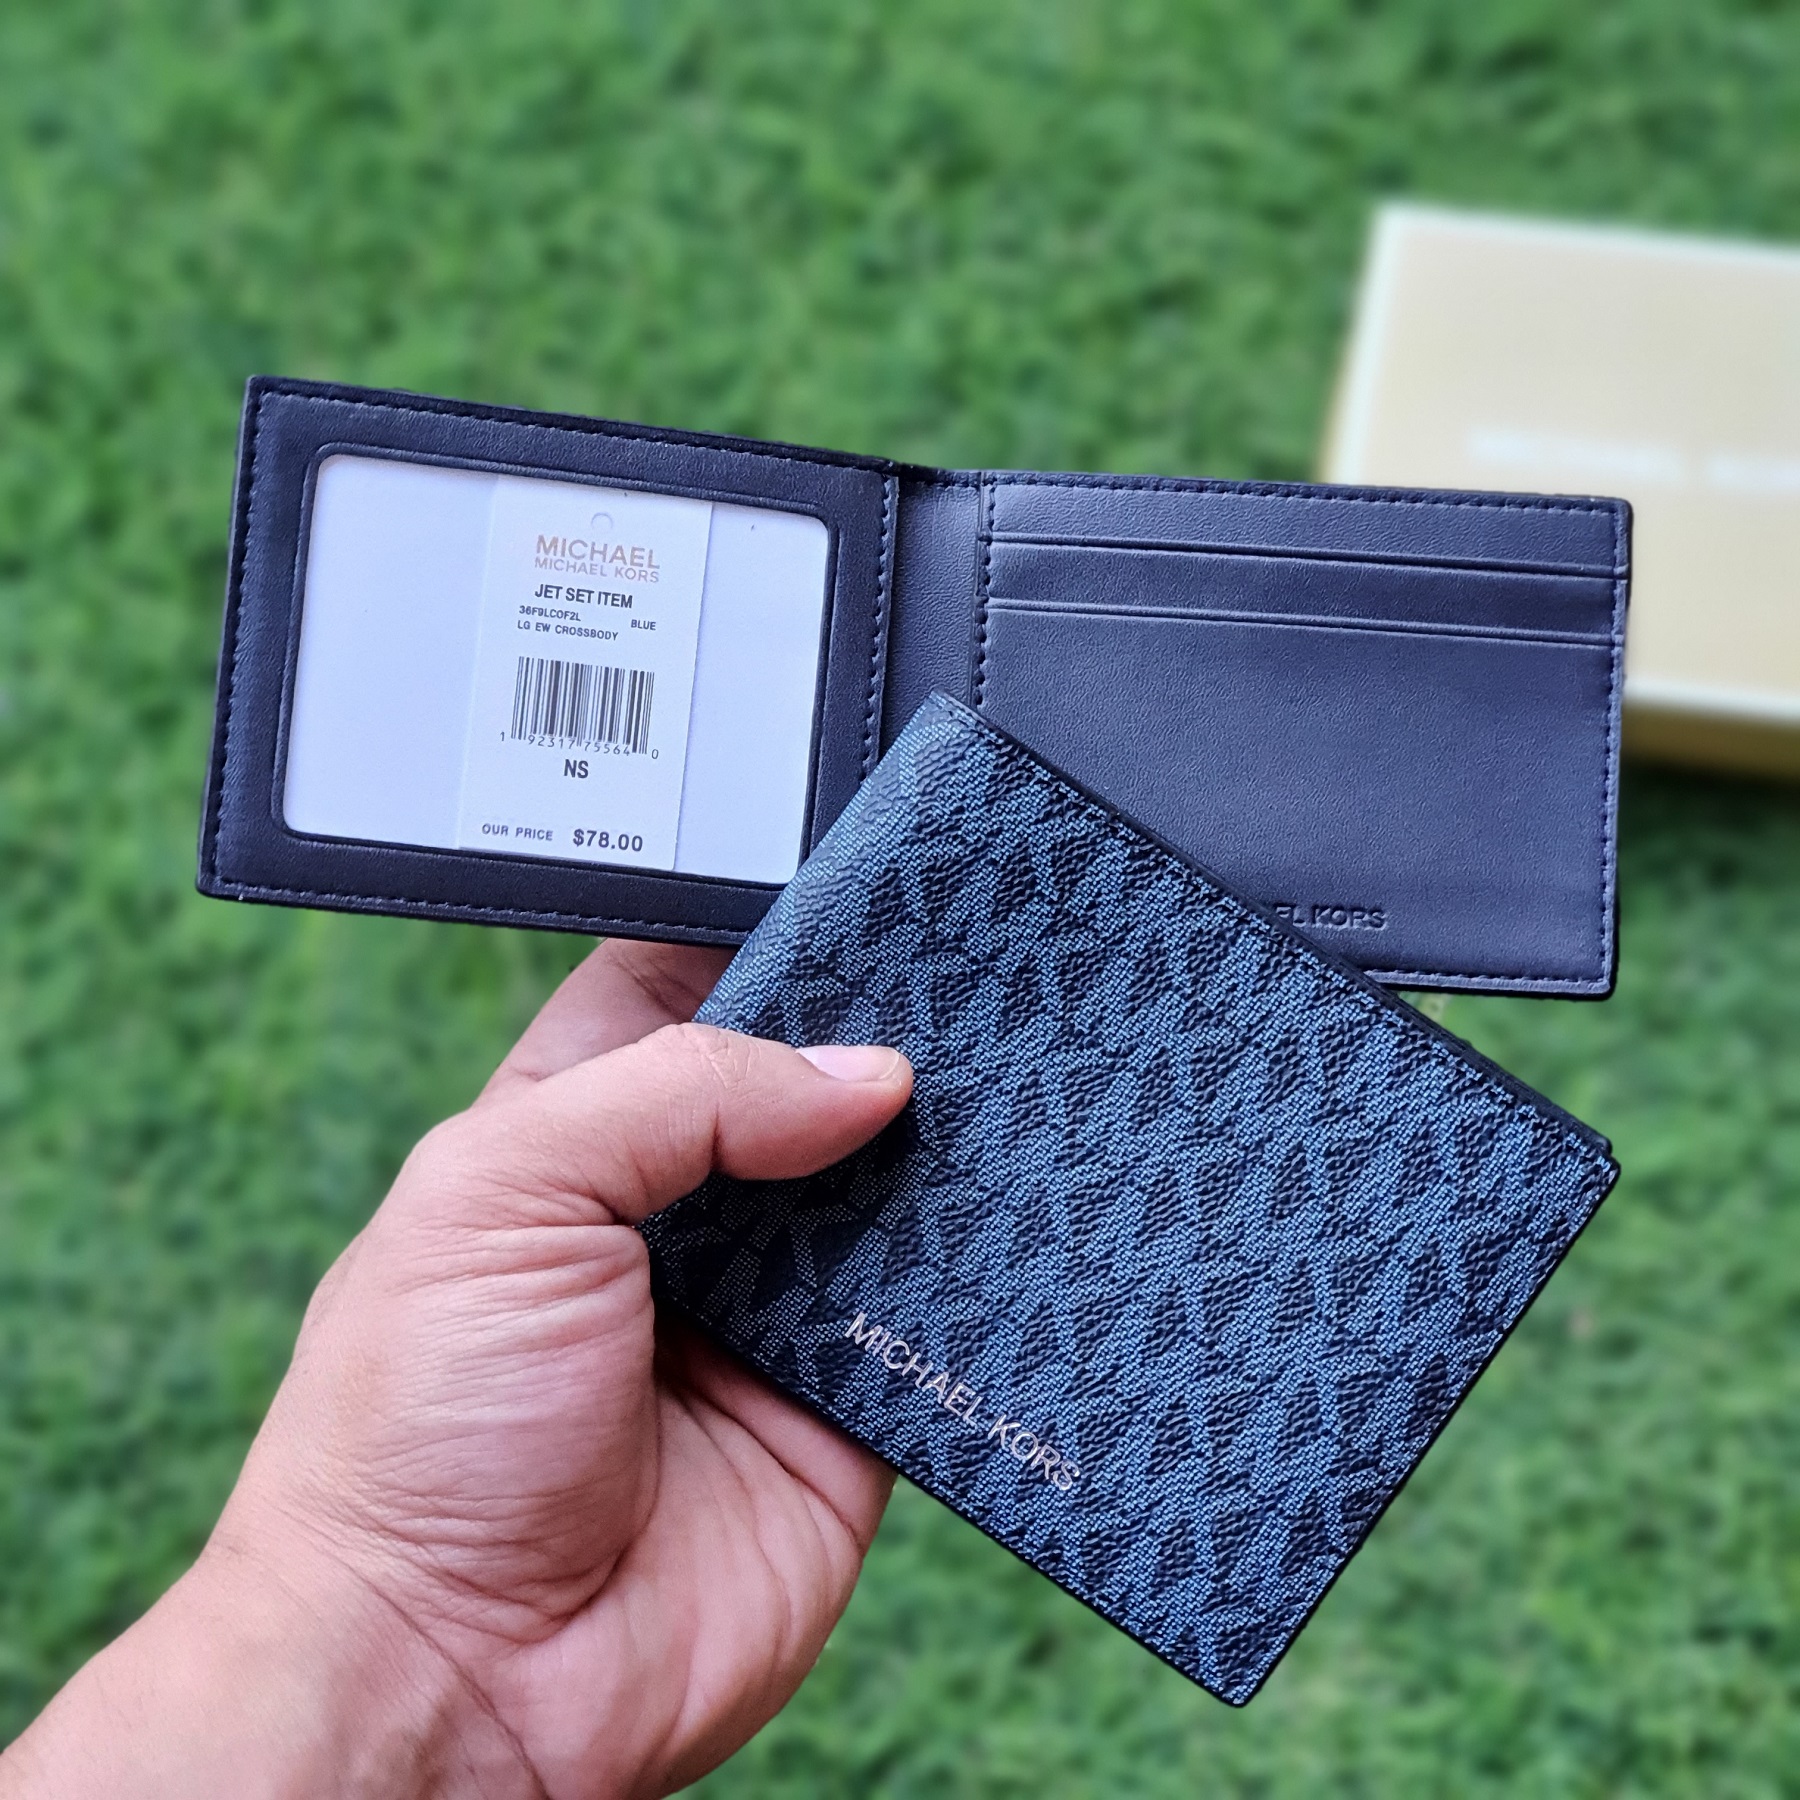 Original Michael Kors Jet Set Men's Monogram Leather Bifold Wallet